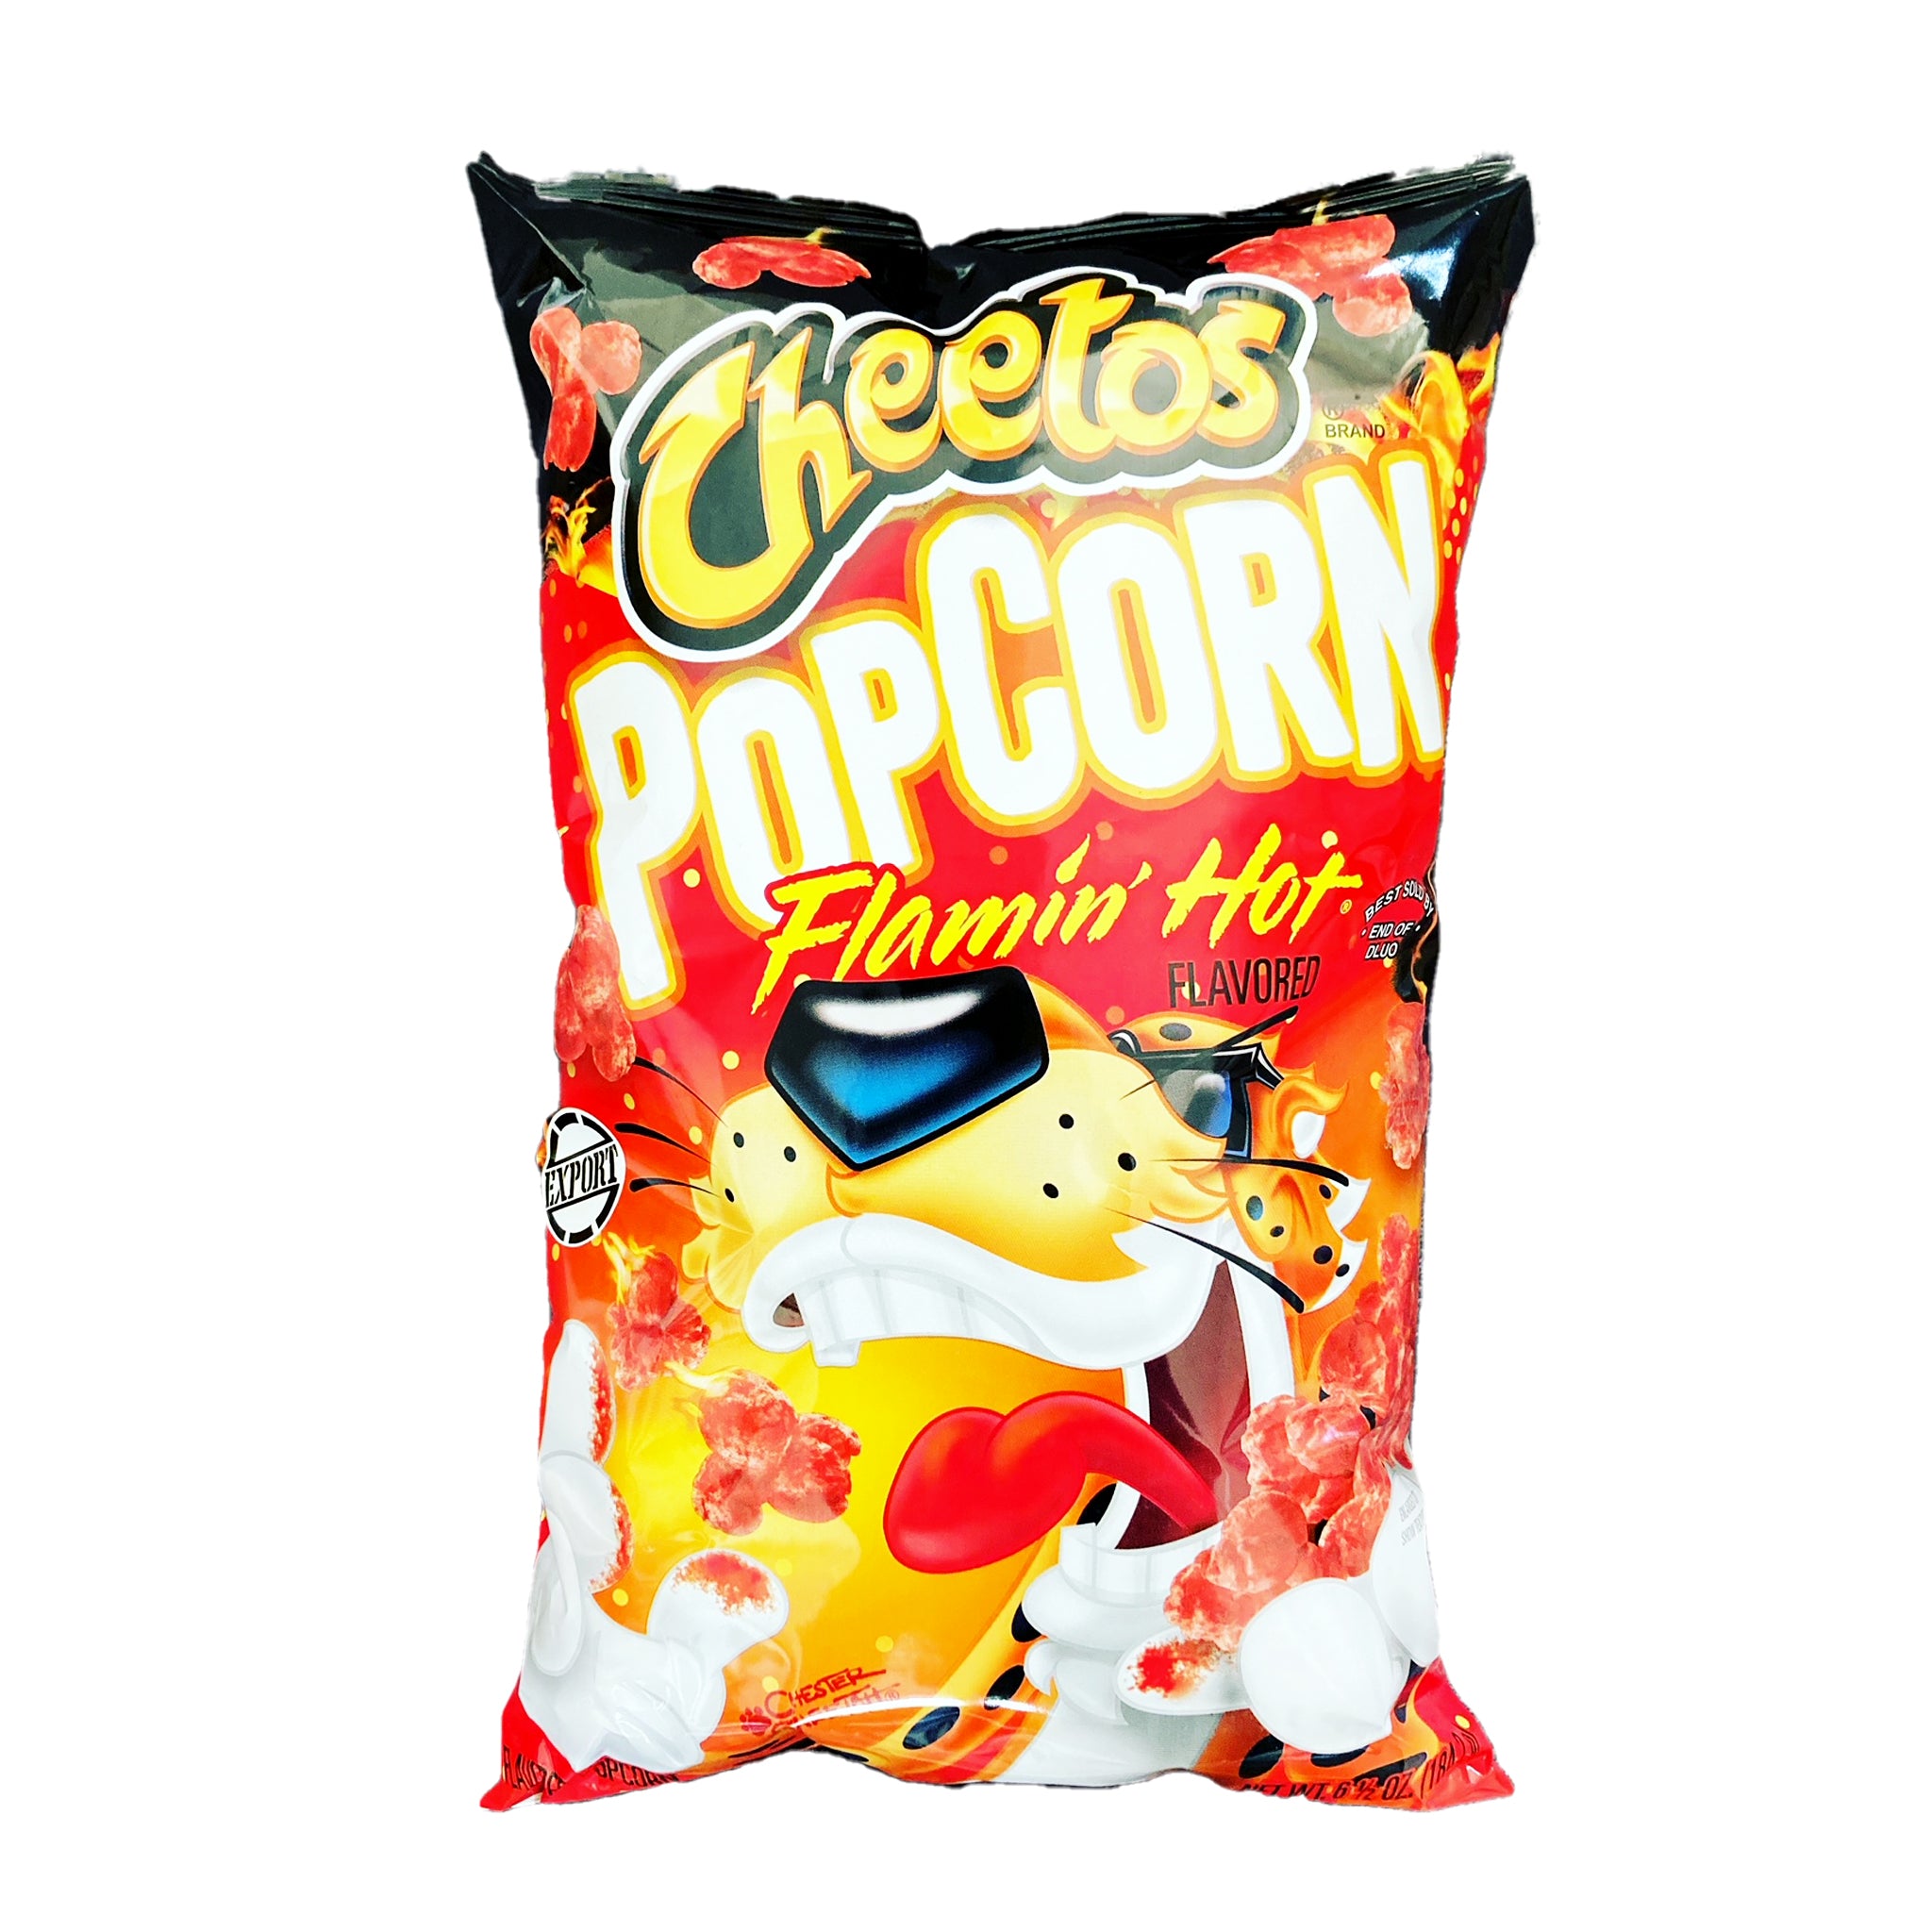 Cheetos Popcorn פופקורן של ציטוס חריף טעימים